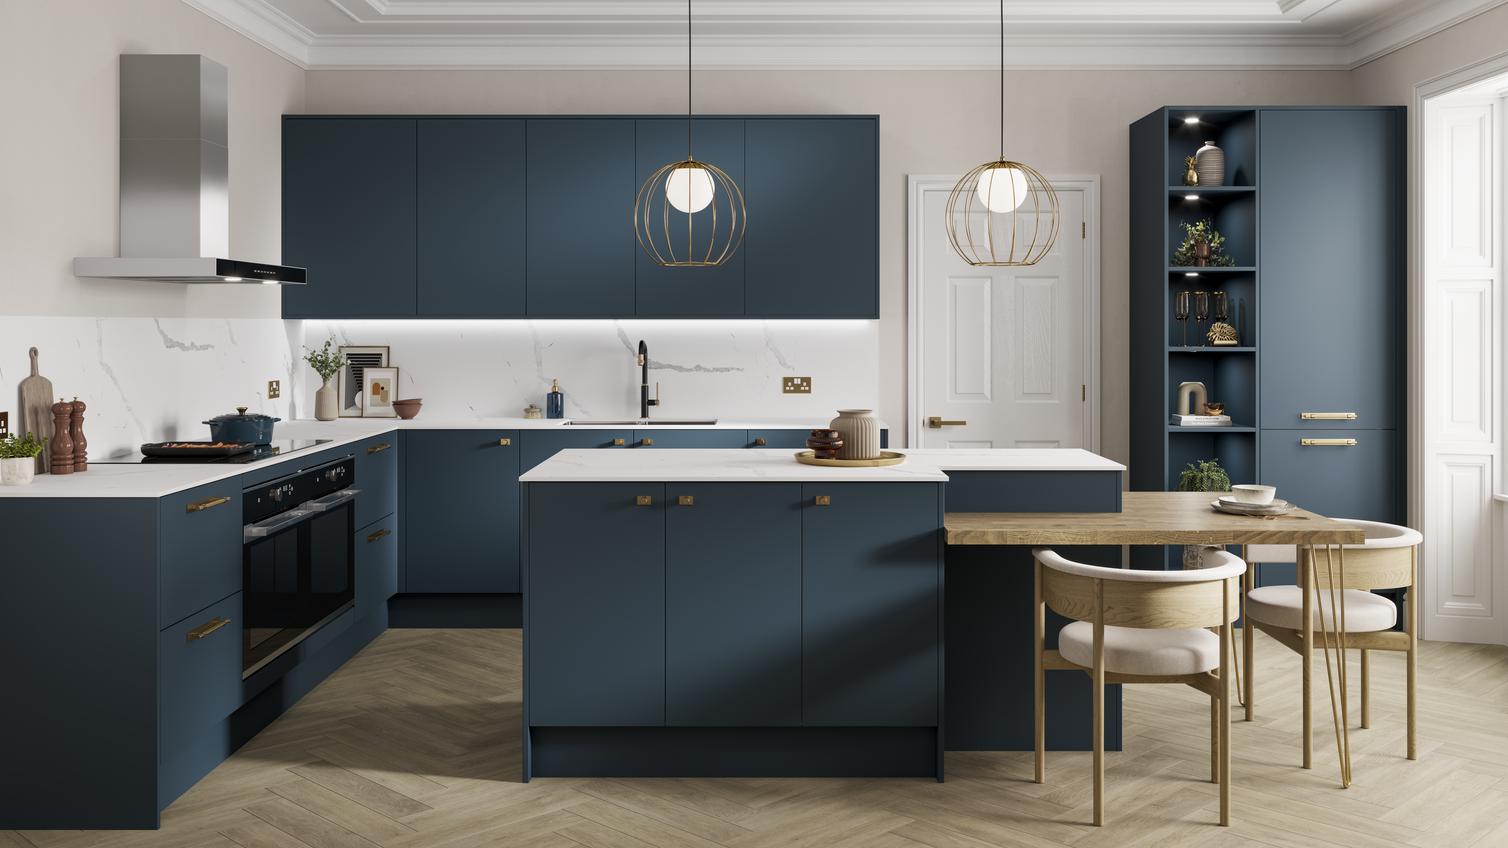 Marine blue kitchen idea with slab doors in an island layout. Has white worktops, light chevron floors, and knob handles.